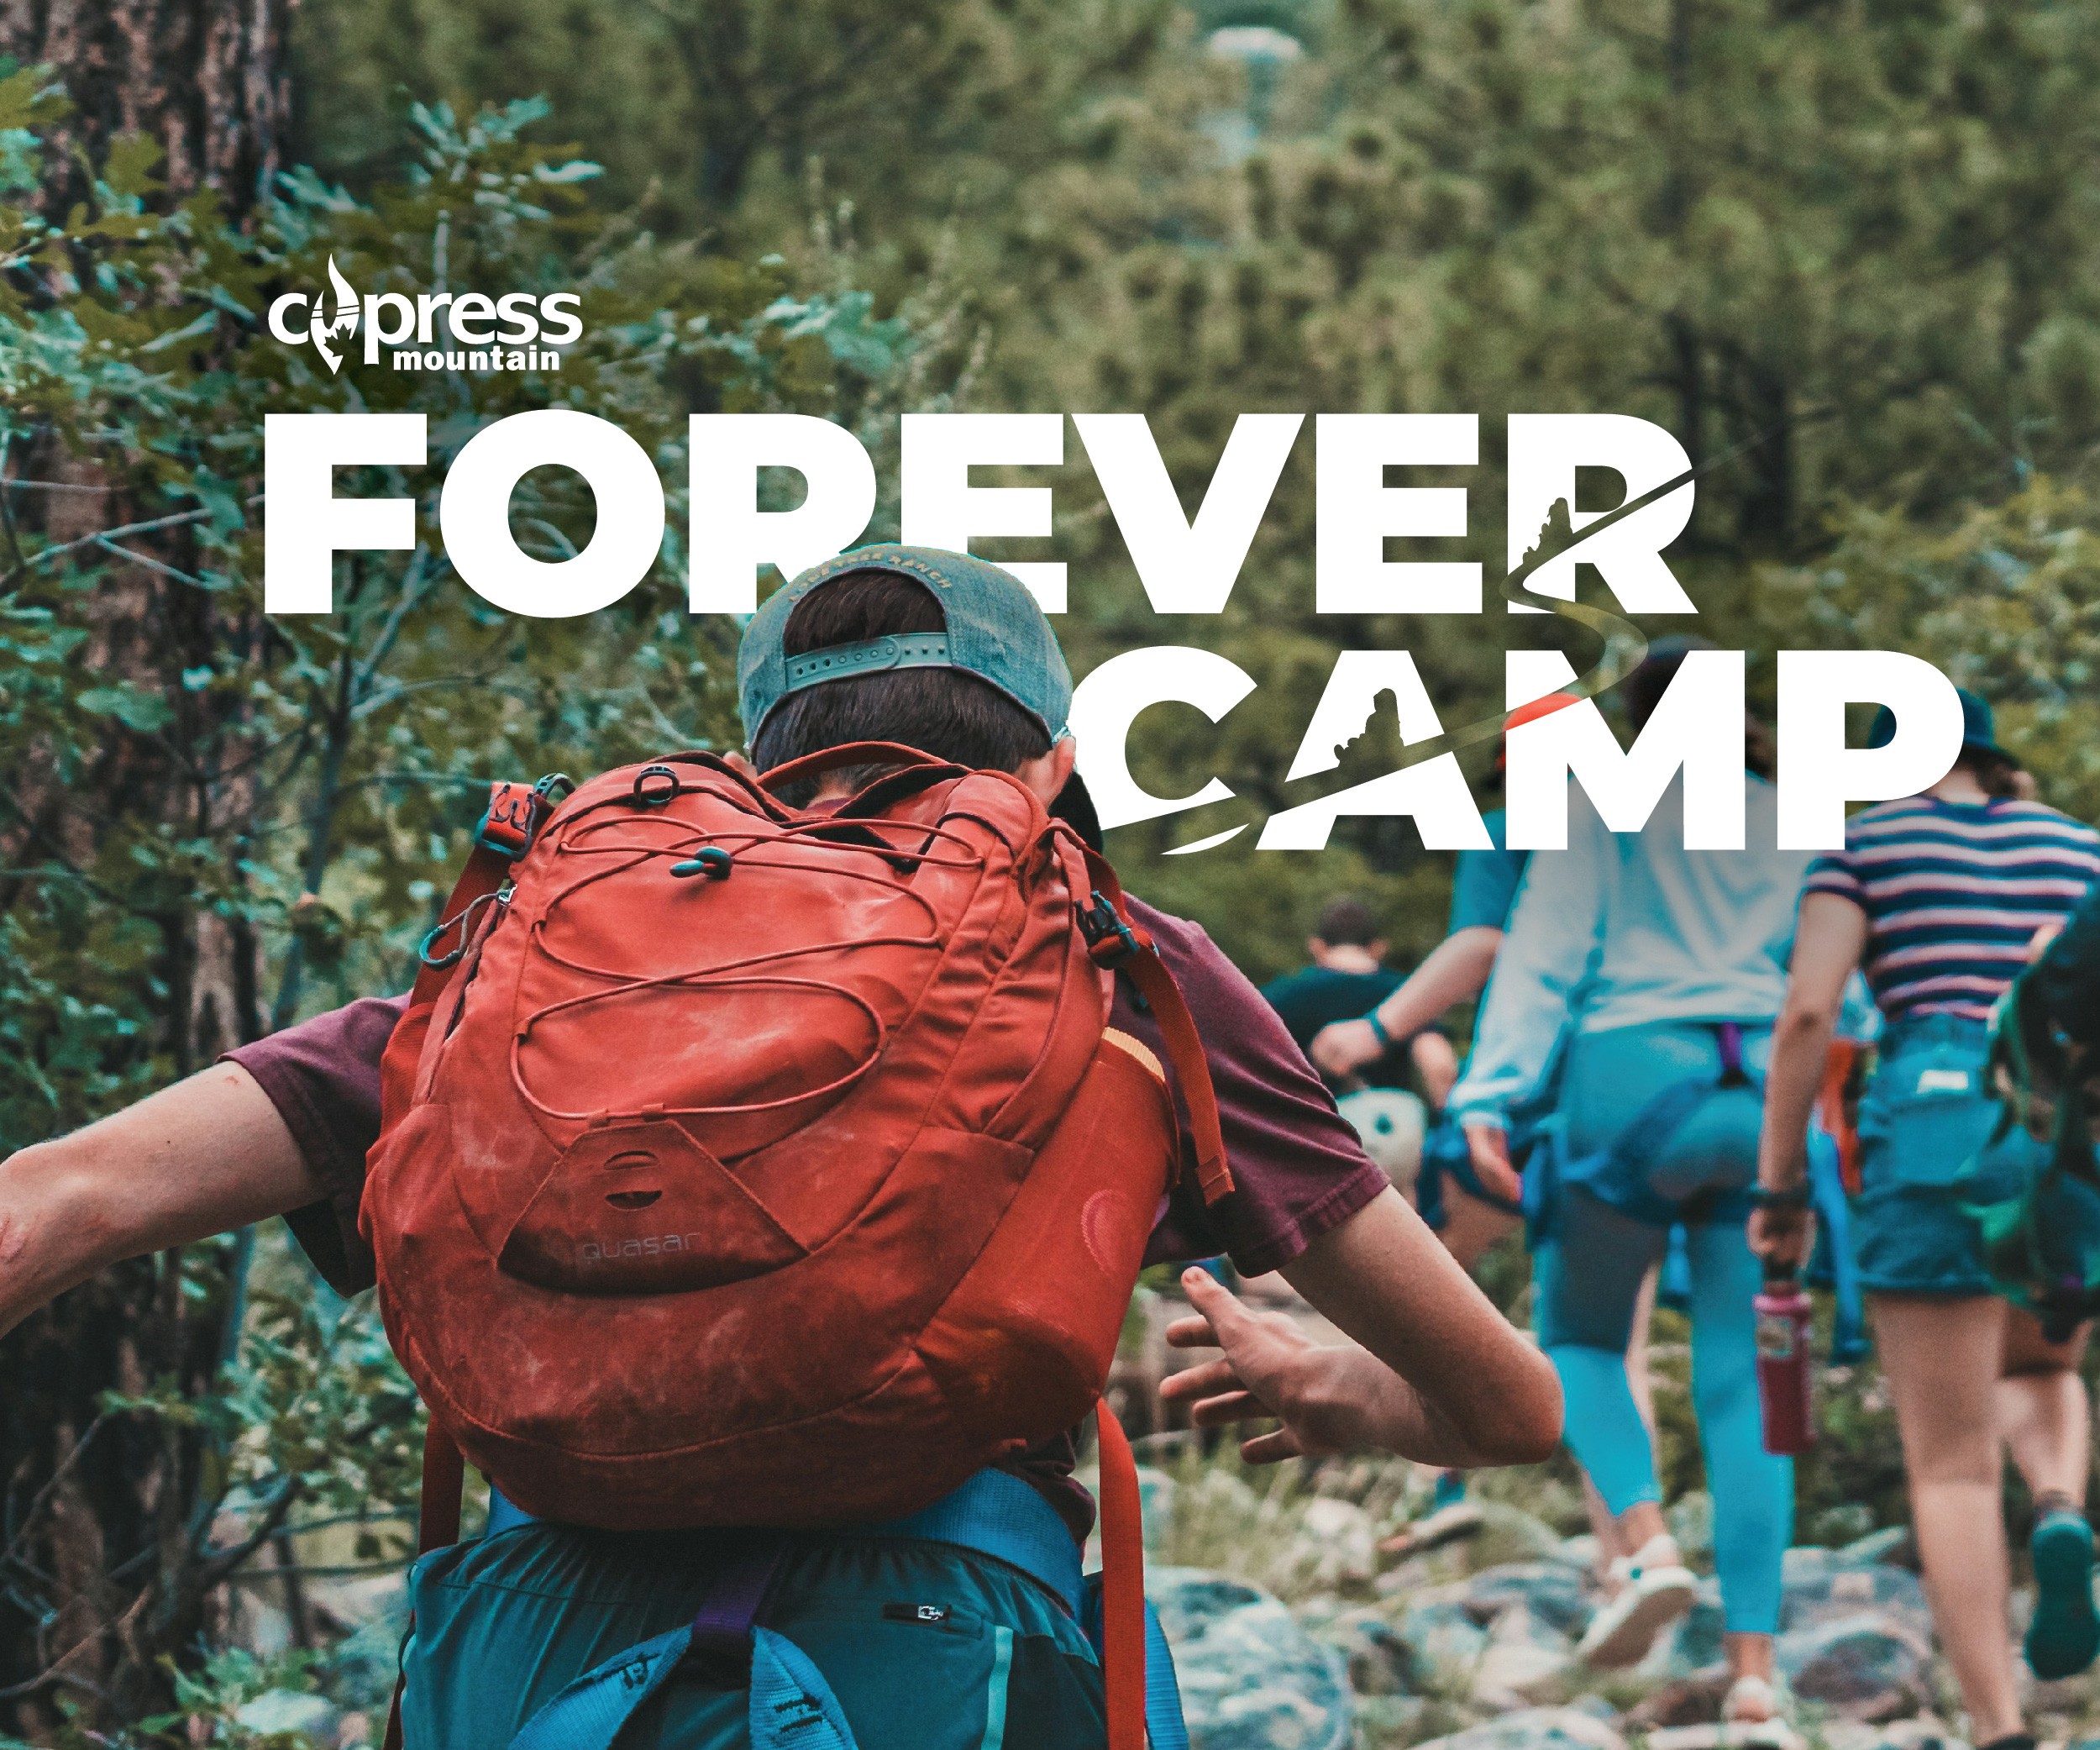 Camp pour toujours de Cypress Mountain